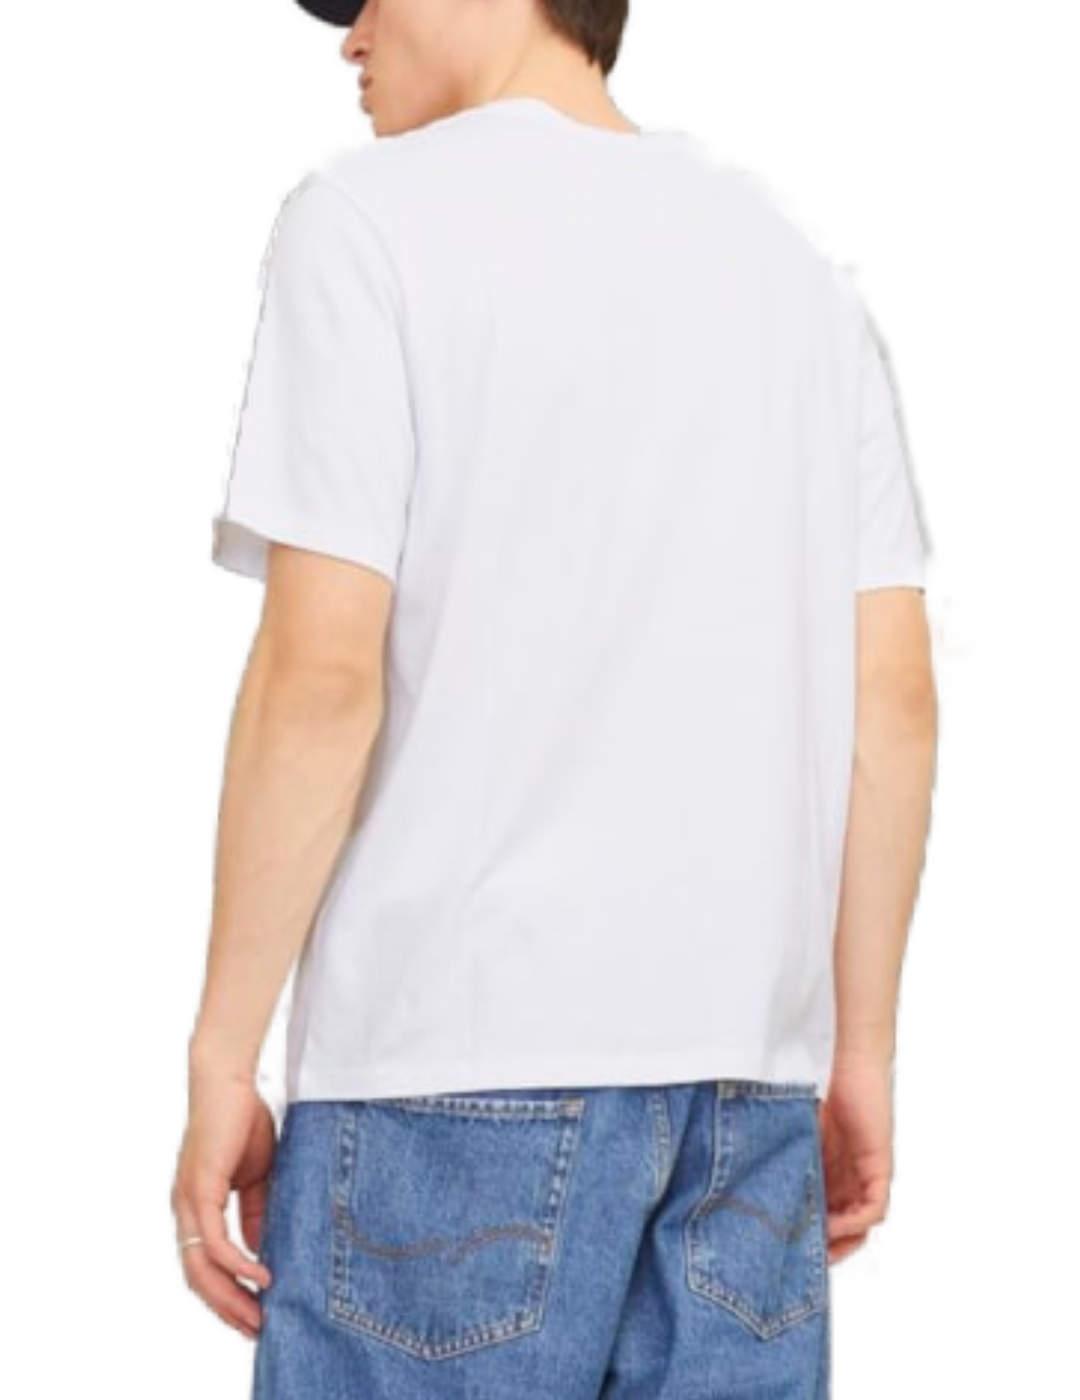 Camiseta Jack&Jones Logo blanco manga corta para hombre